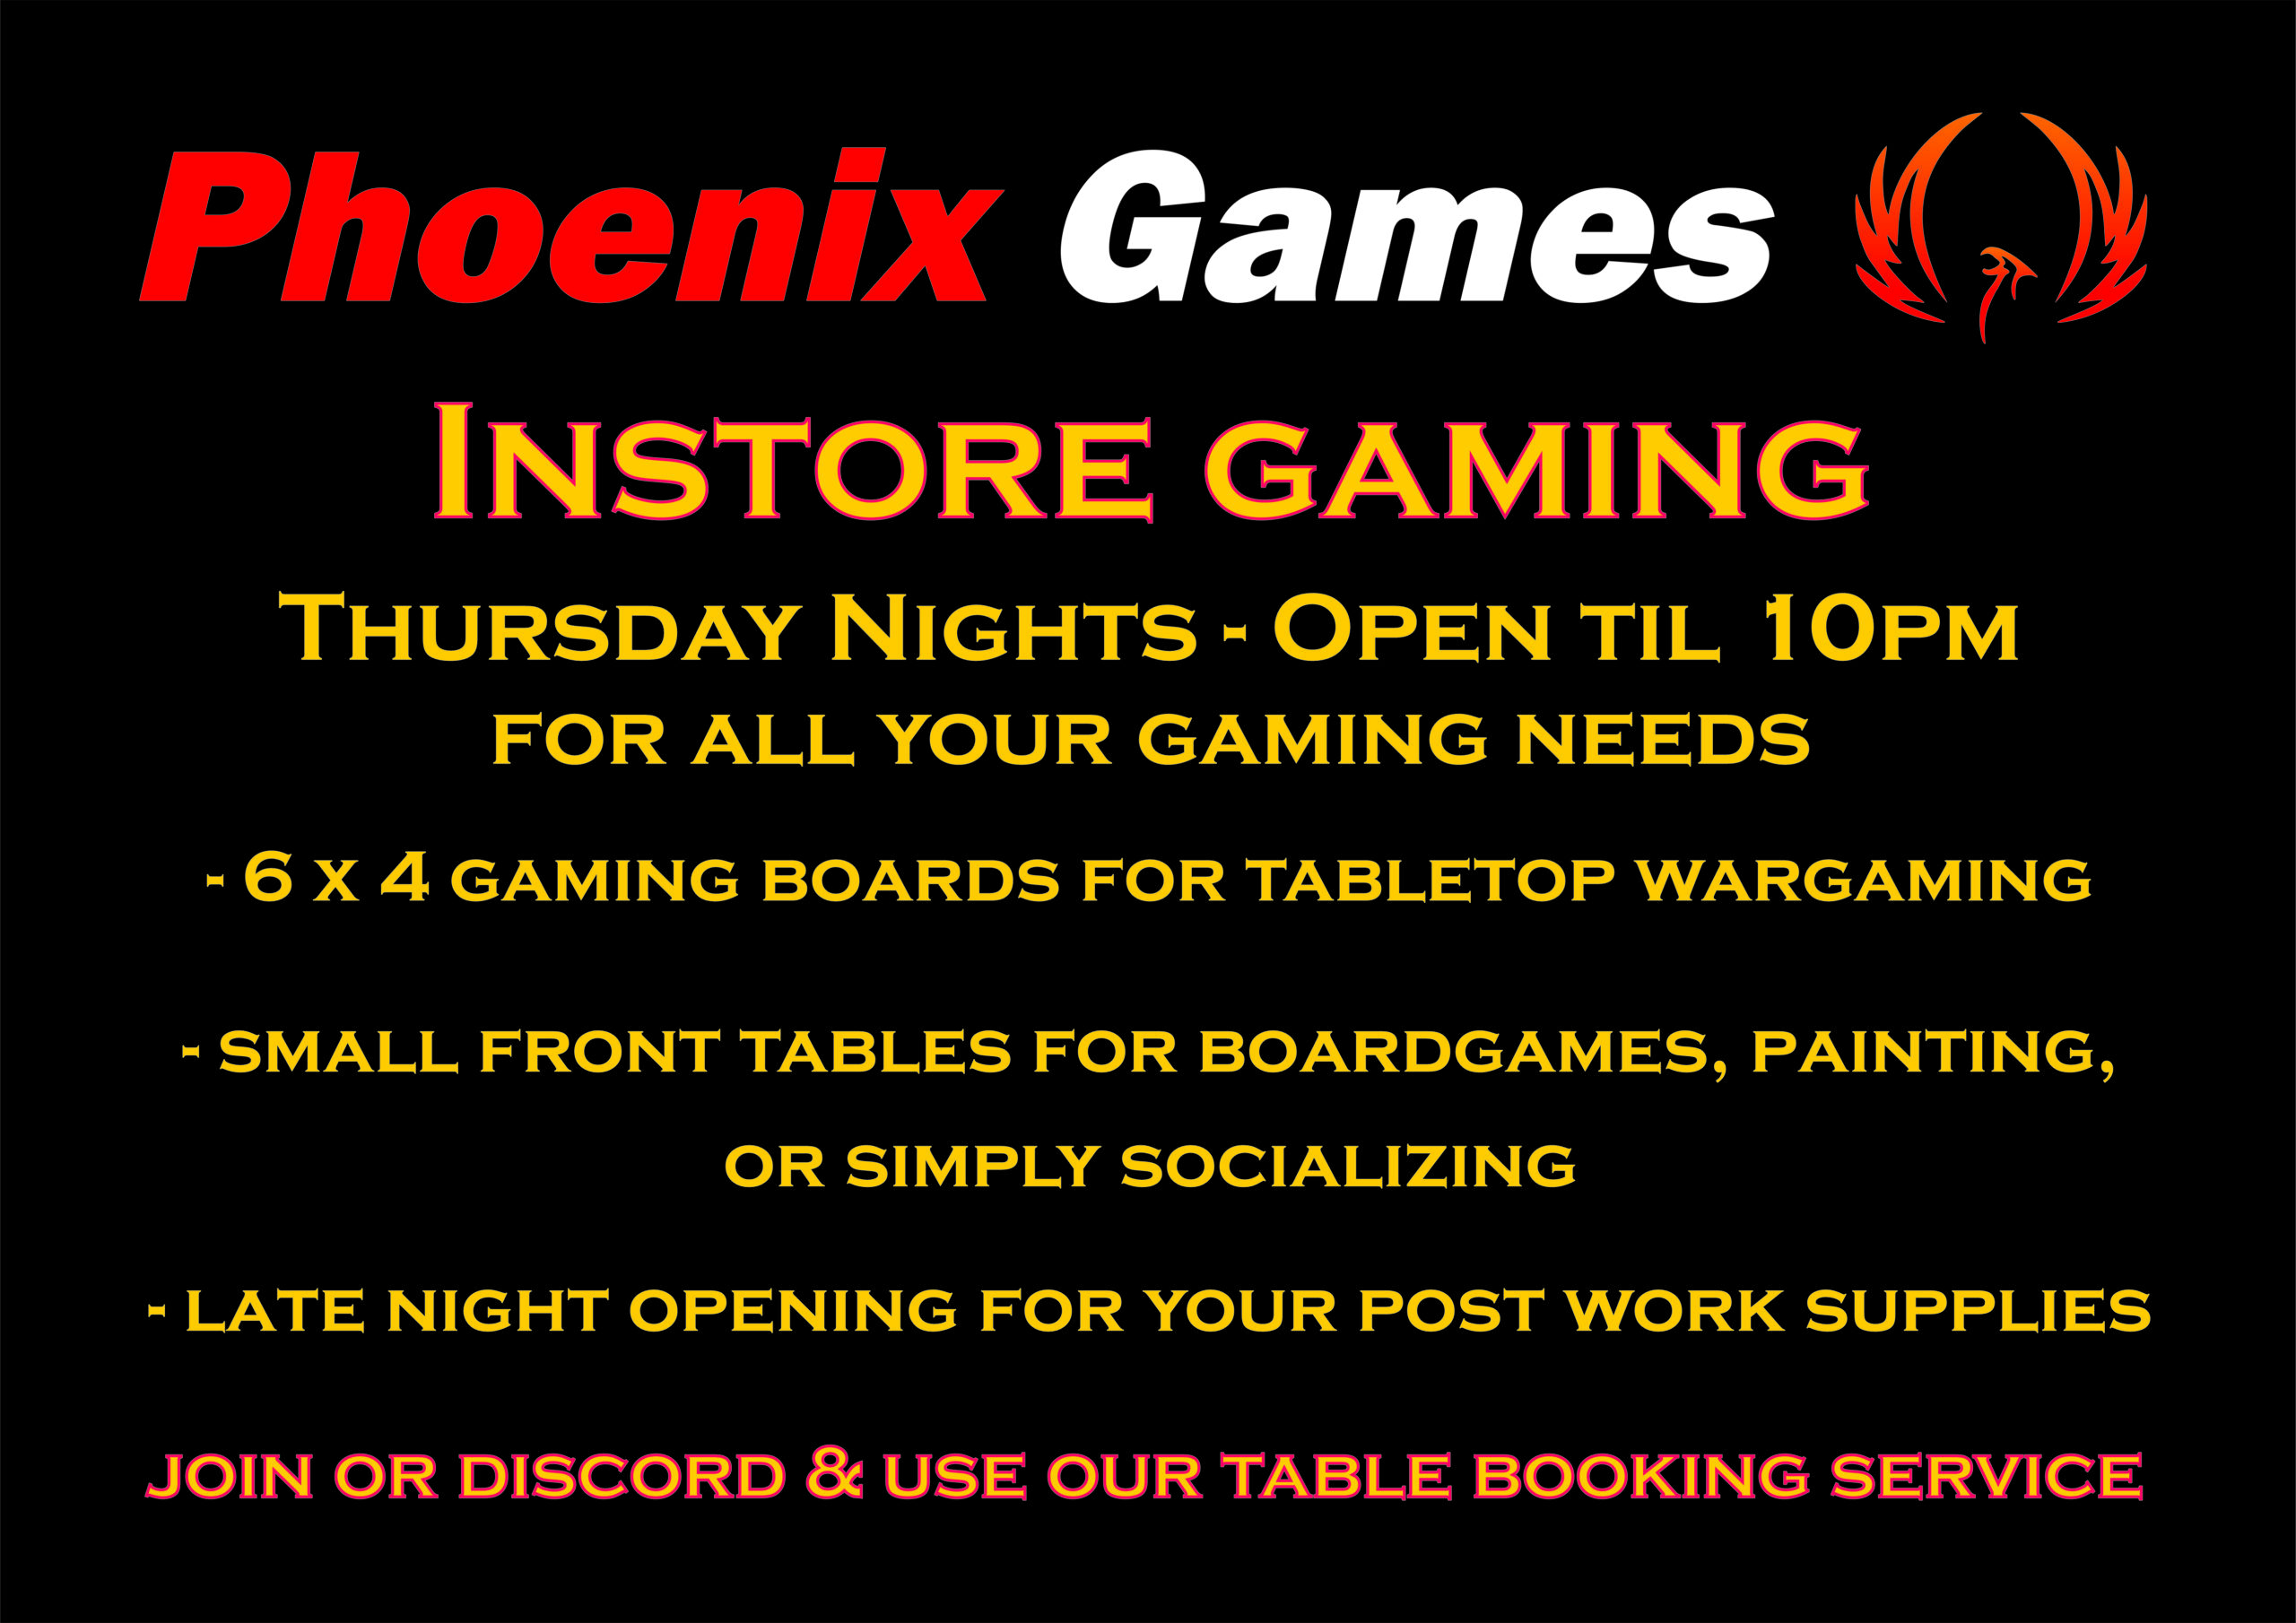 Phoenix Games in-store gaming